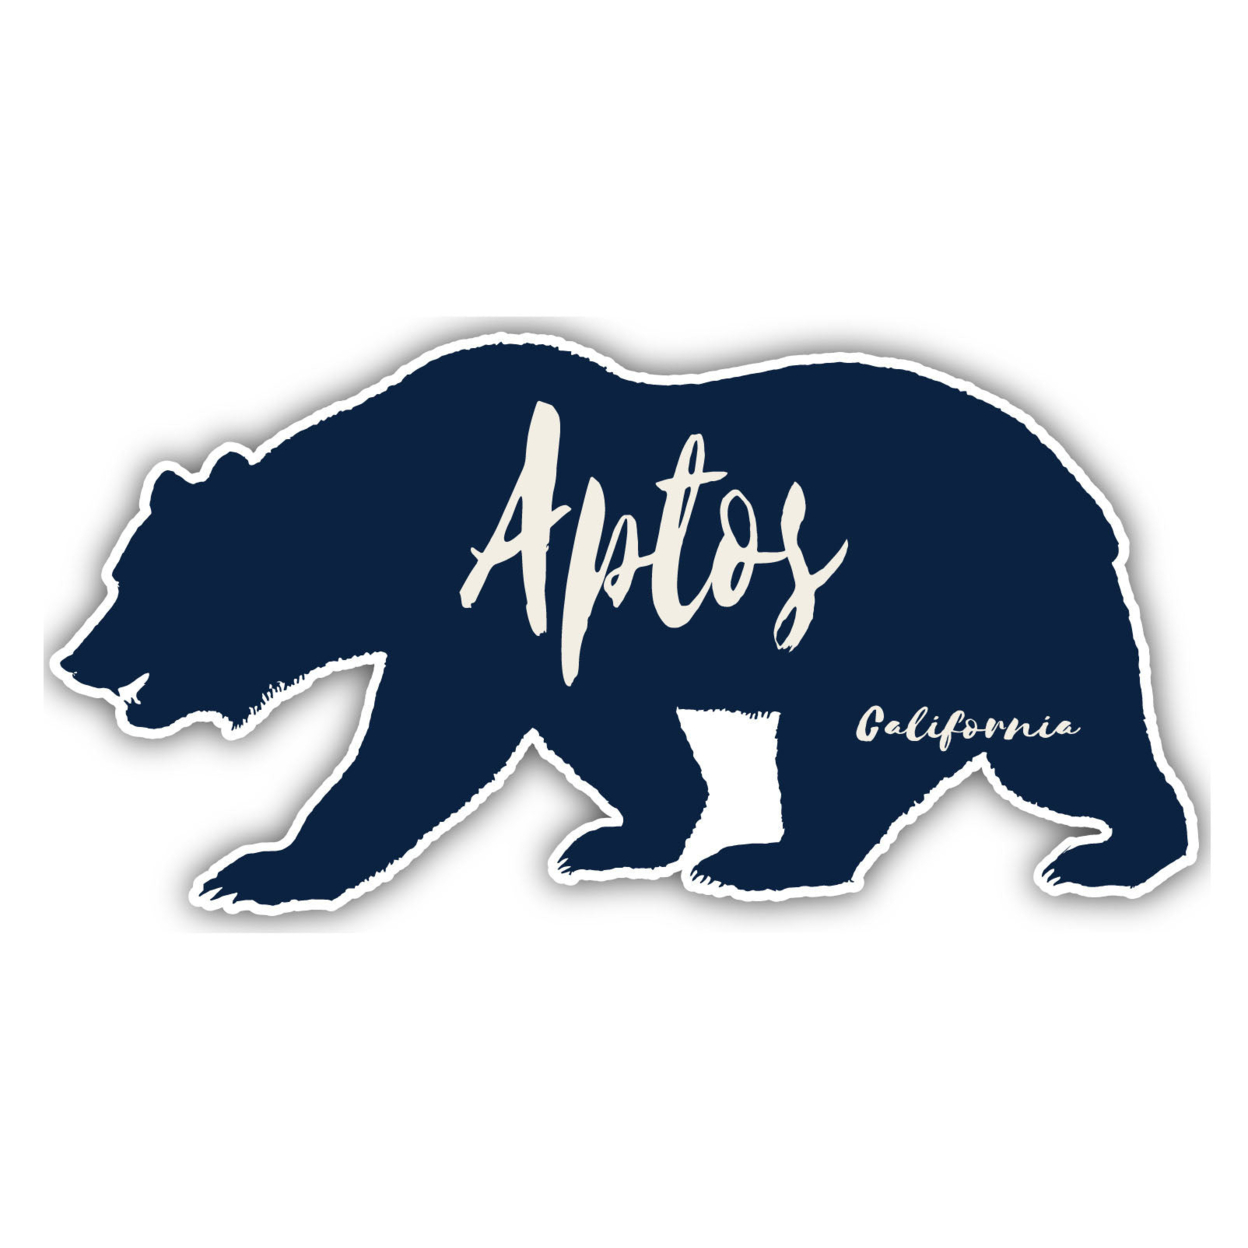 Aptos California Souvenir Decorative Stickers (Choose Theme And Size) - 4-Pack, 8-Inch, Bear